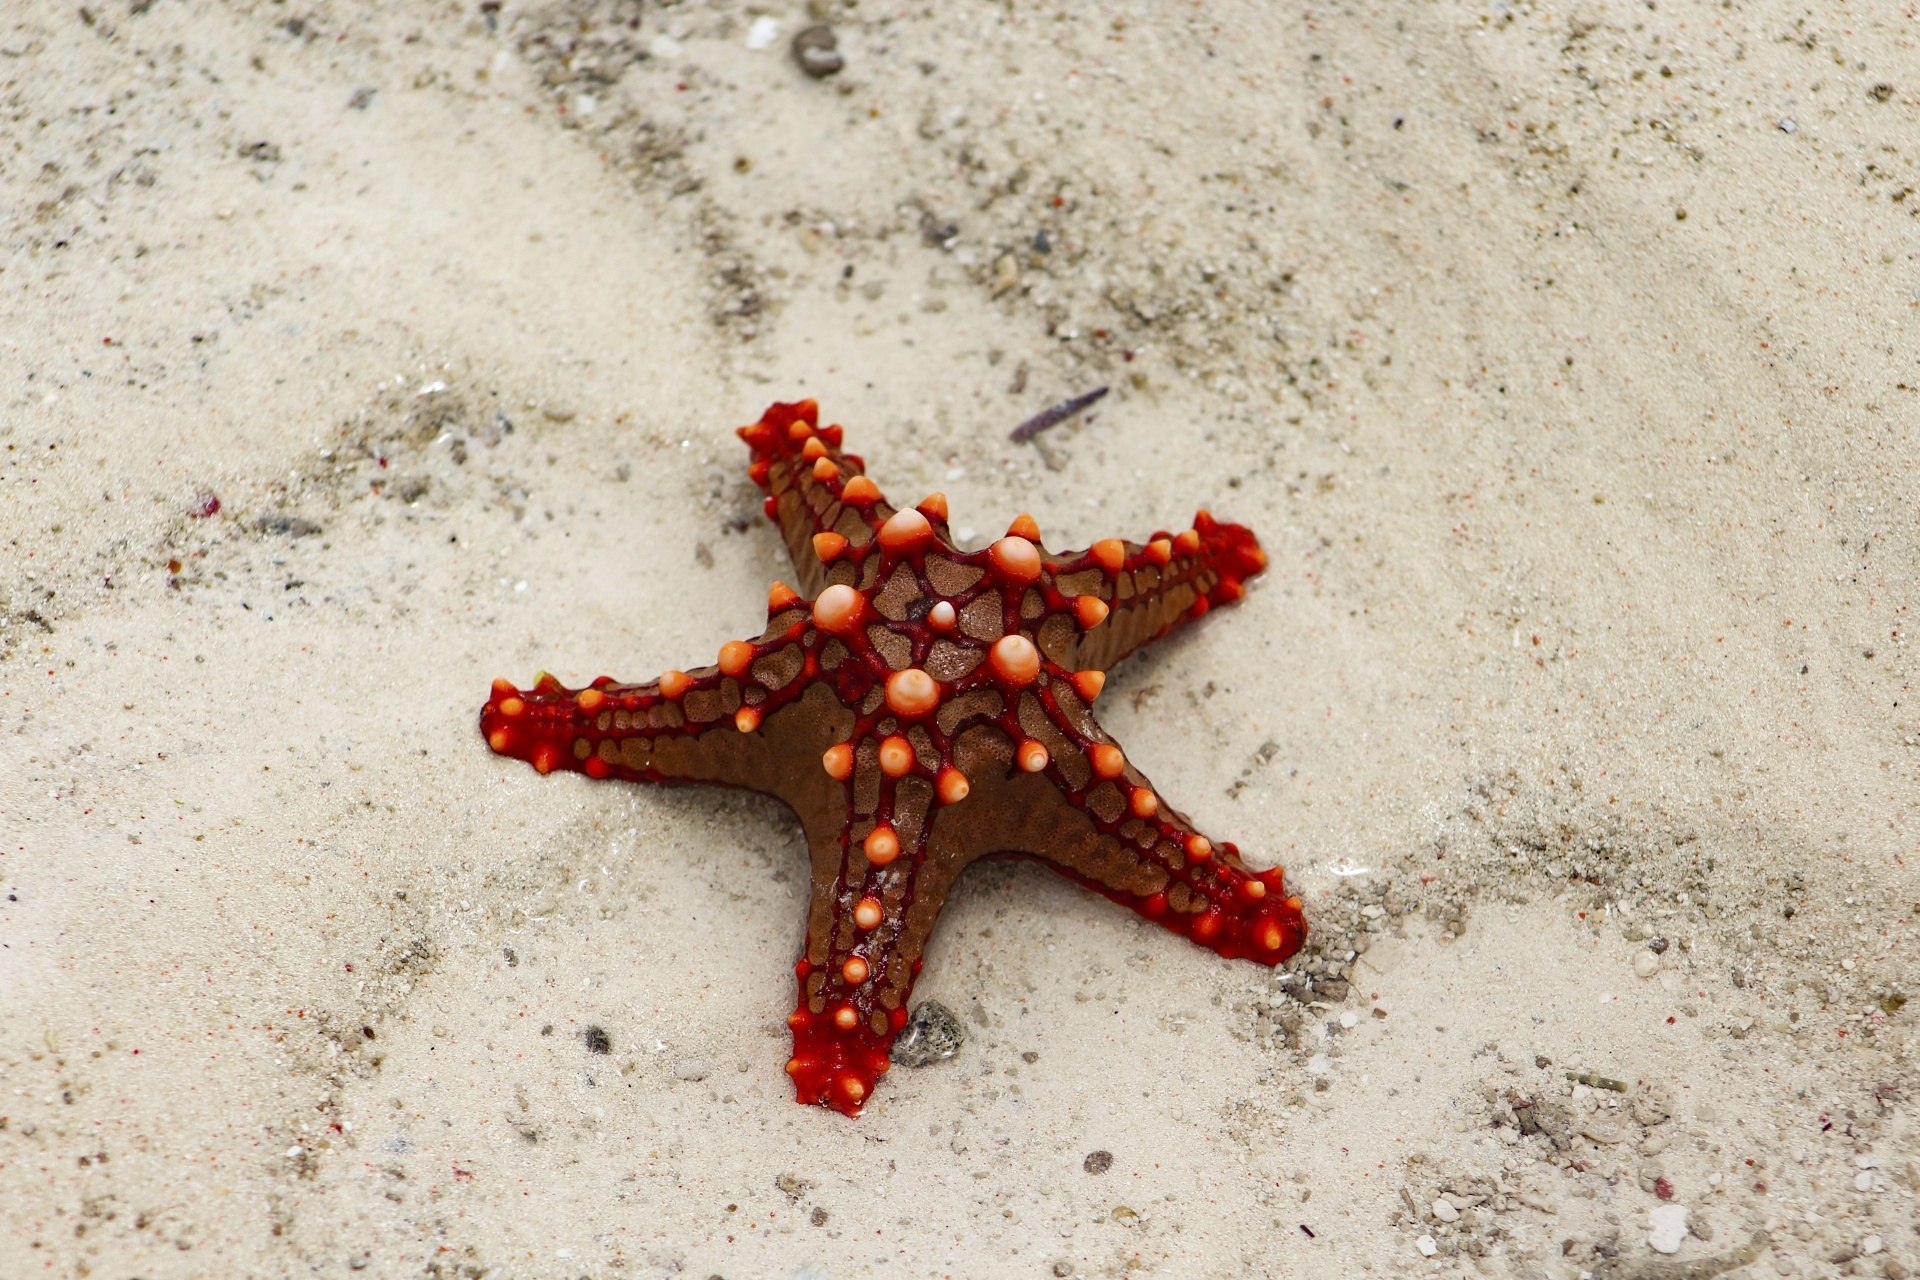 Морская звезда архипо. Морская звезда. Королевская морская звезда. Иглокожие морские звезды. Морская звезда и кораллы.